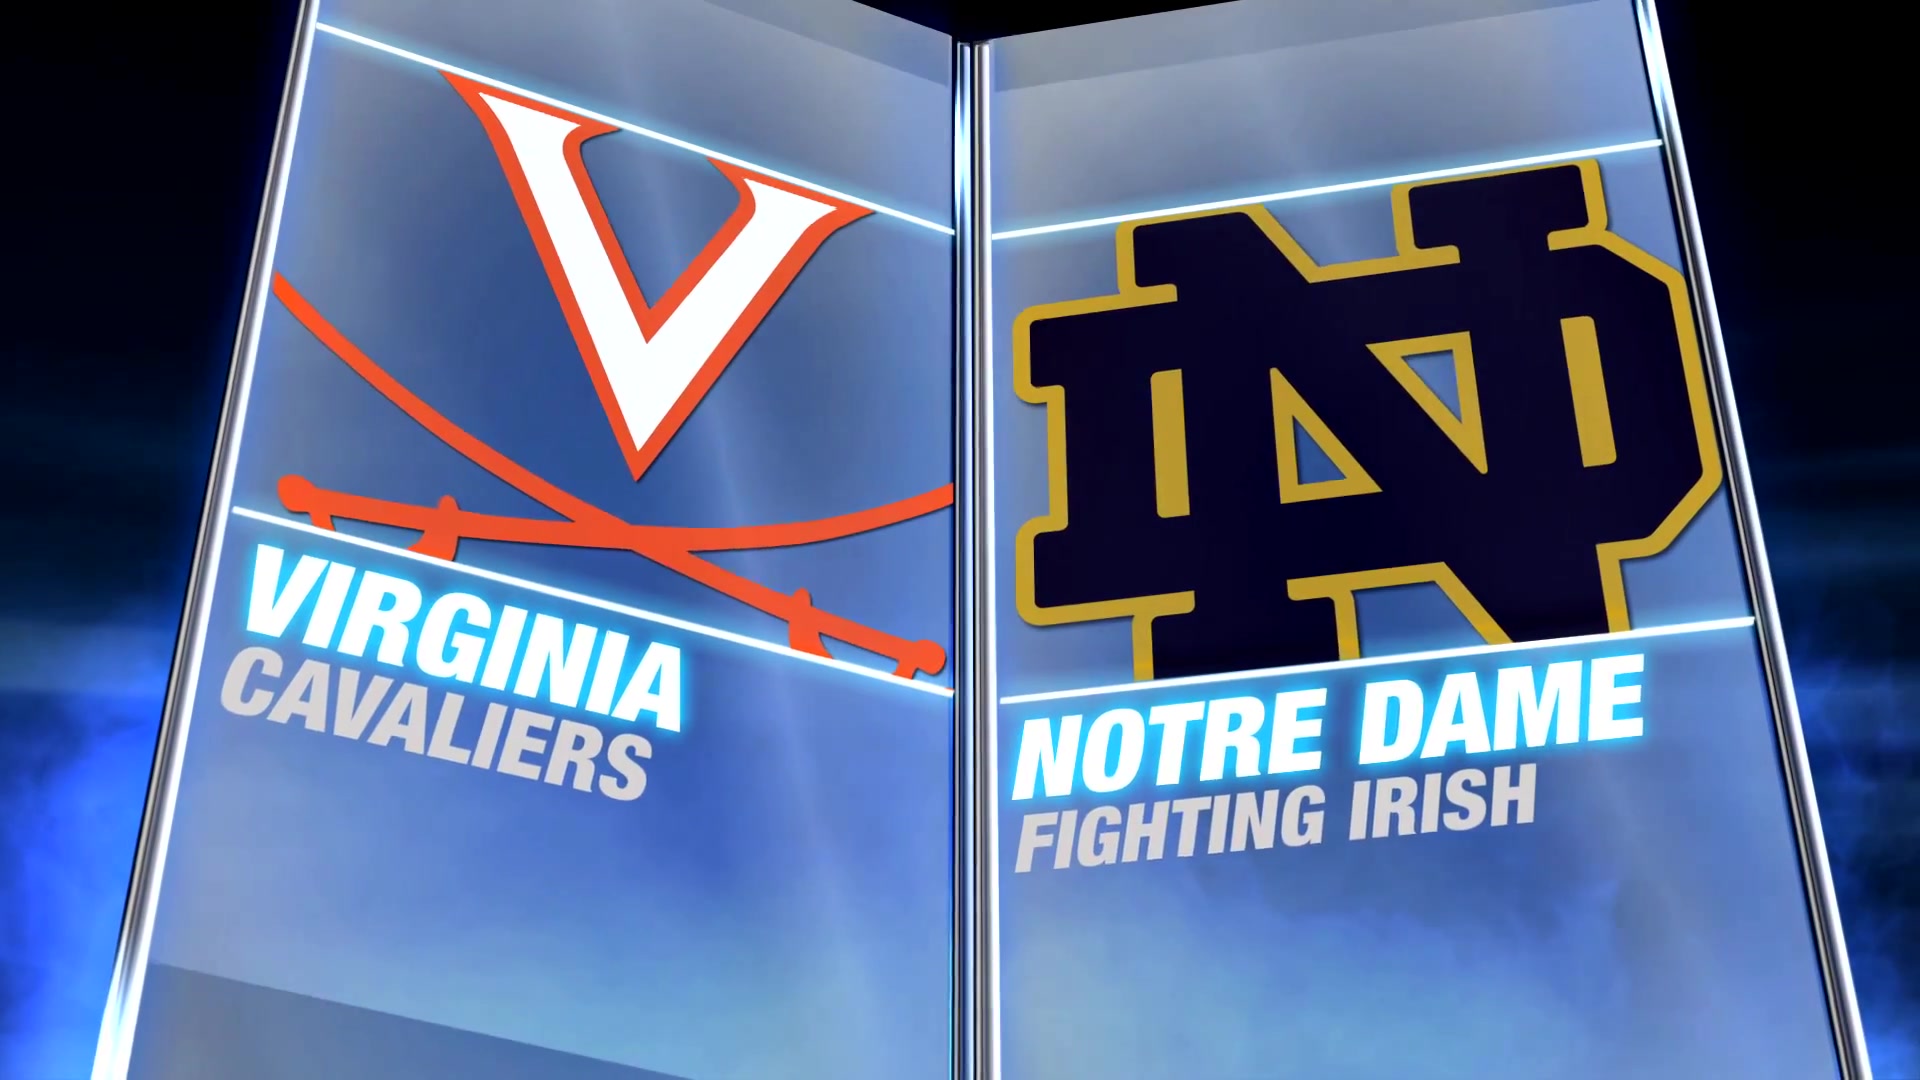 Virginia vs. Notre Dame Men's Soccer Highlights (2015)